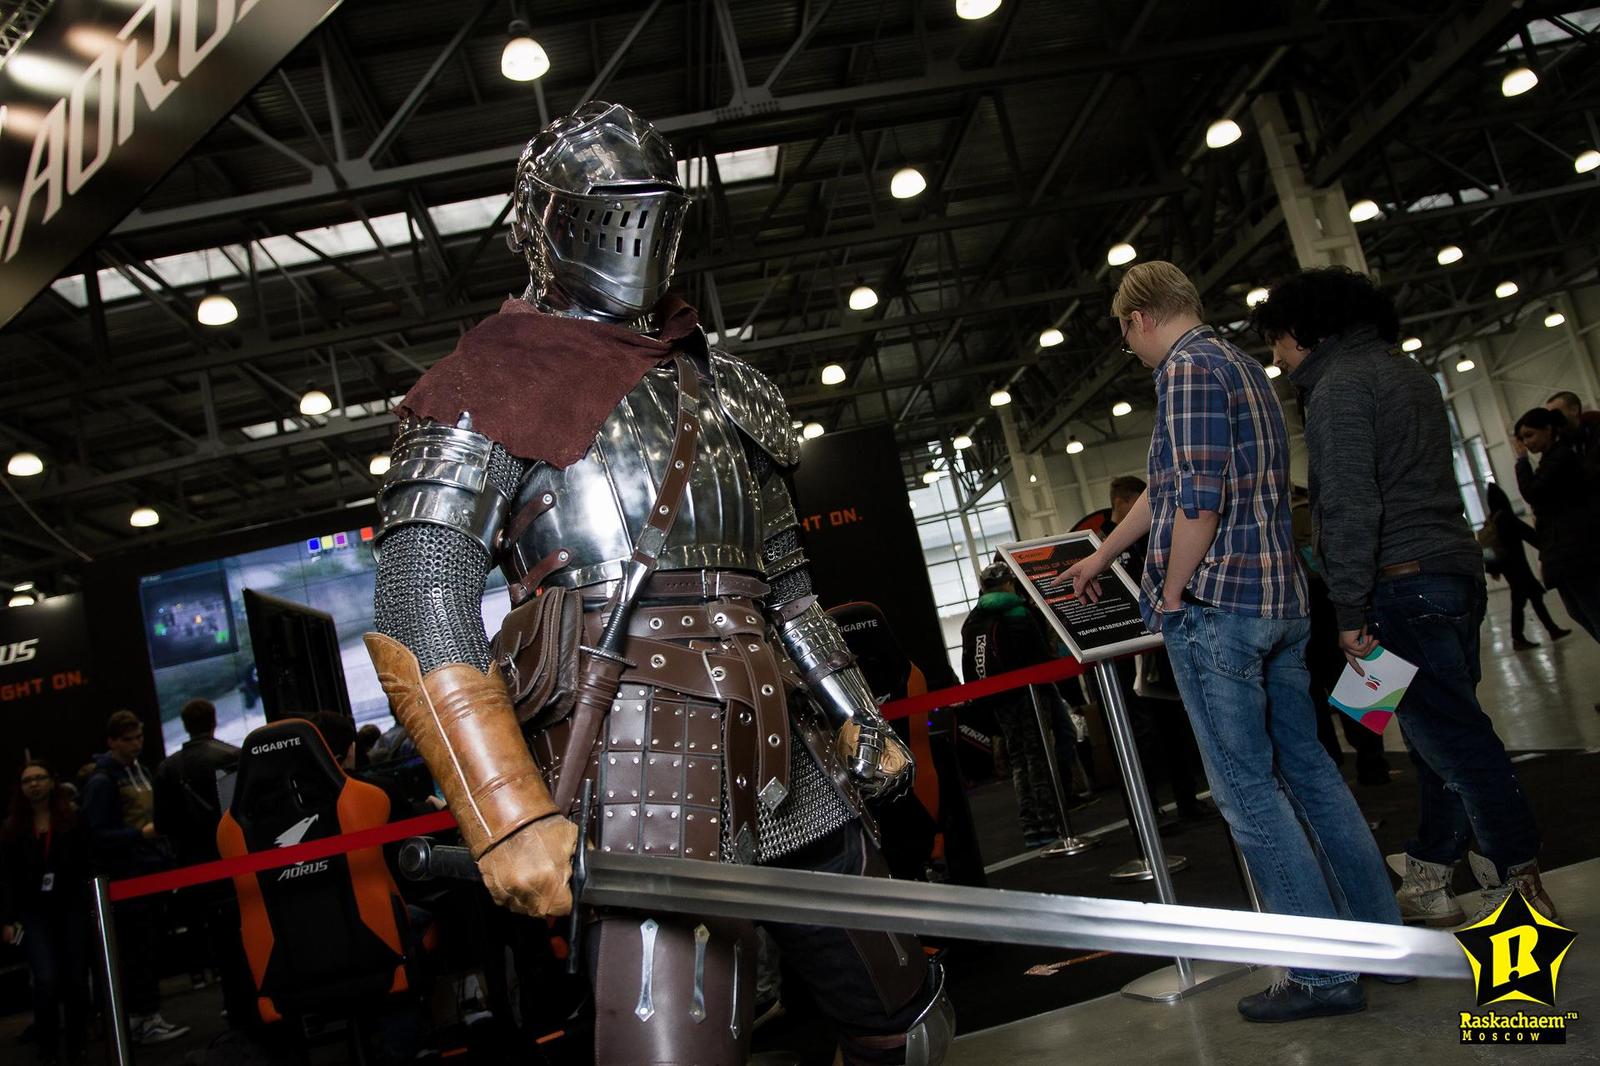 Knight armor from Dark Souls - My, Dark souls, Dark souls 2, Dark souls 3, Cosplay, Russian cosplay, Knight, Armor, Longpost, Knights